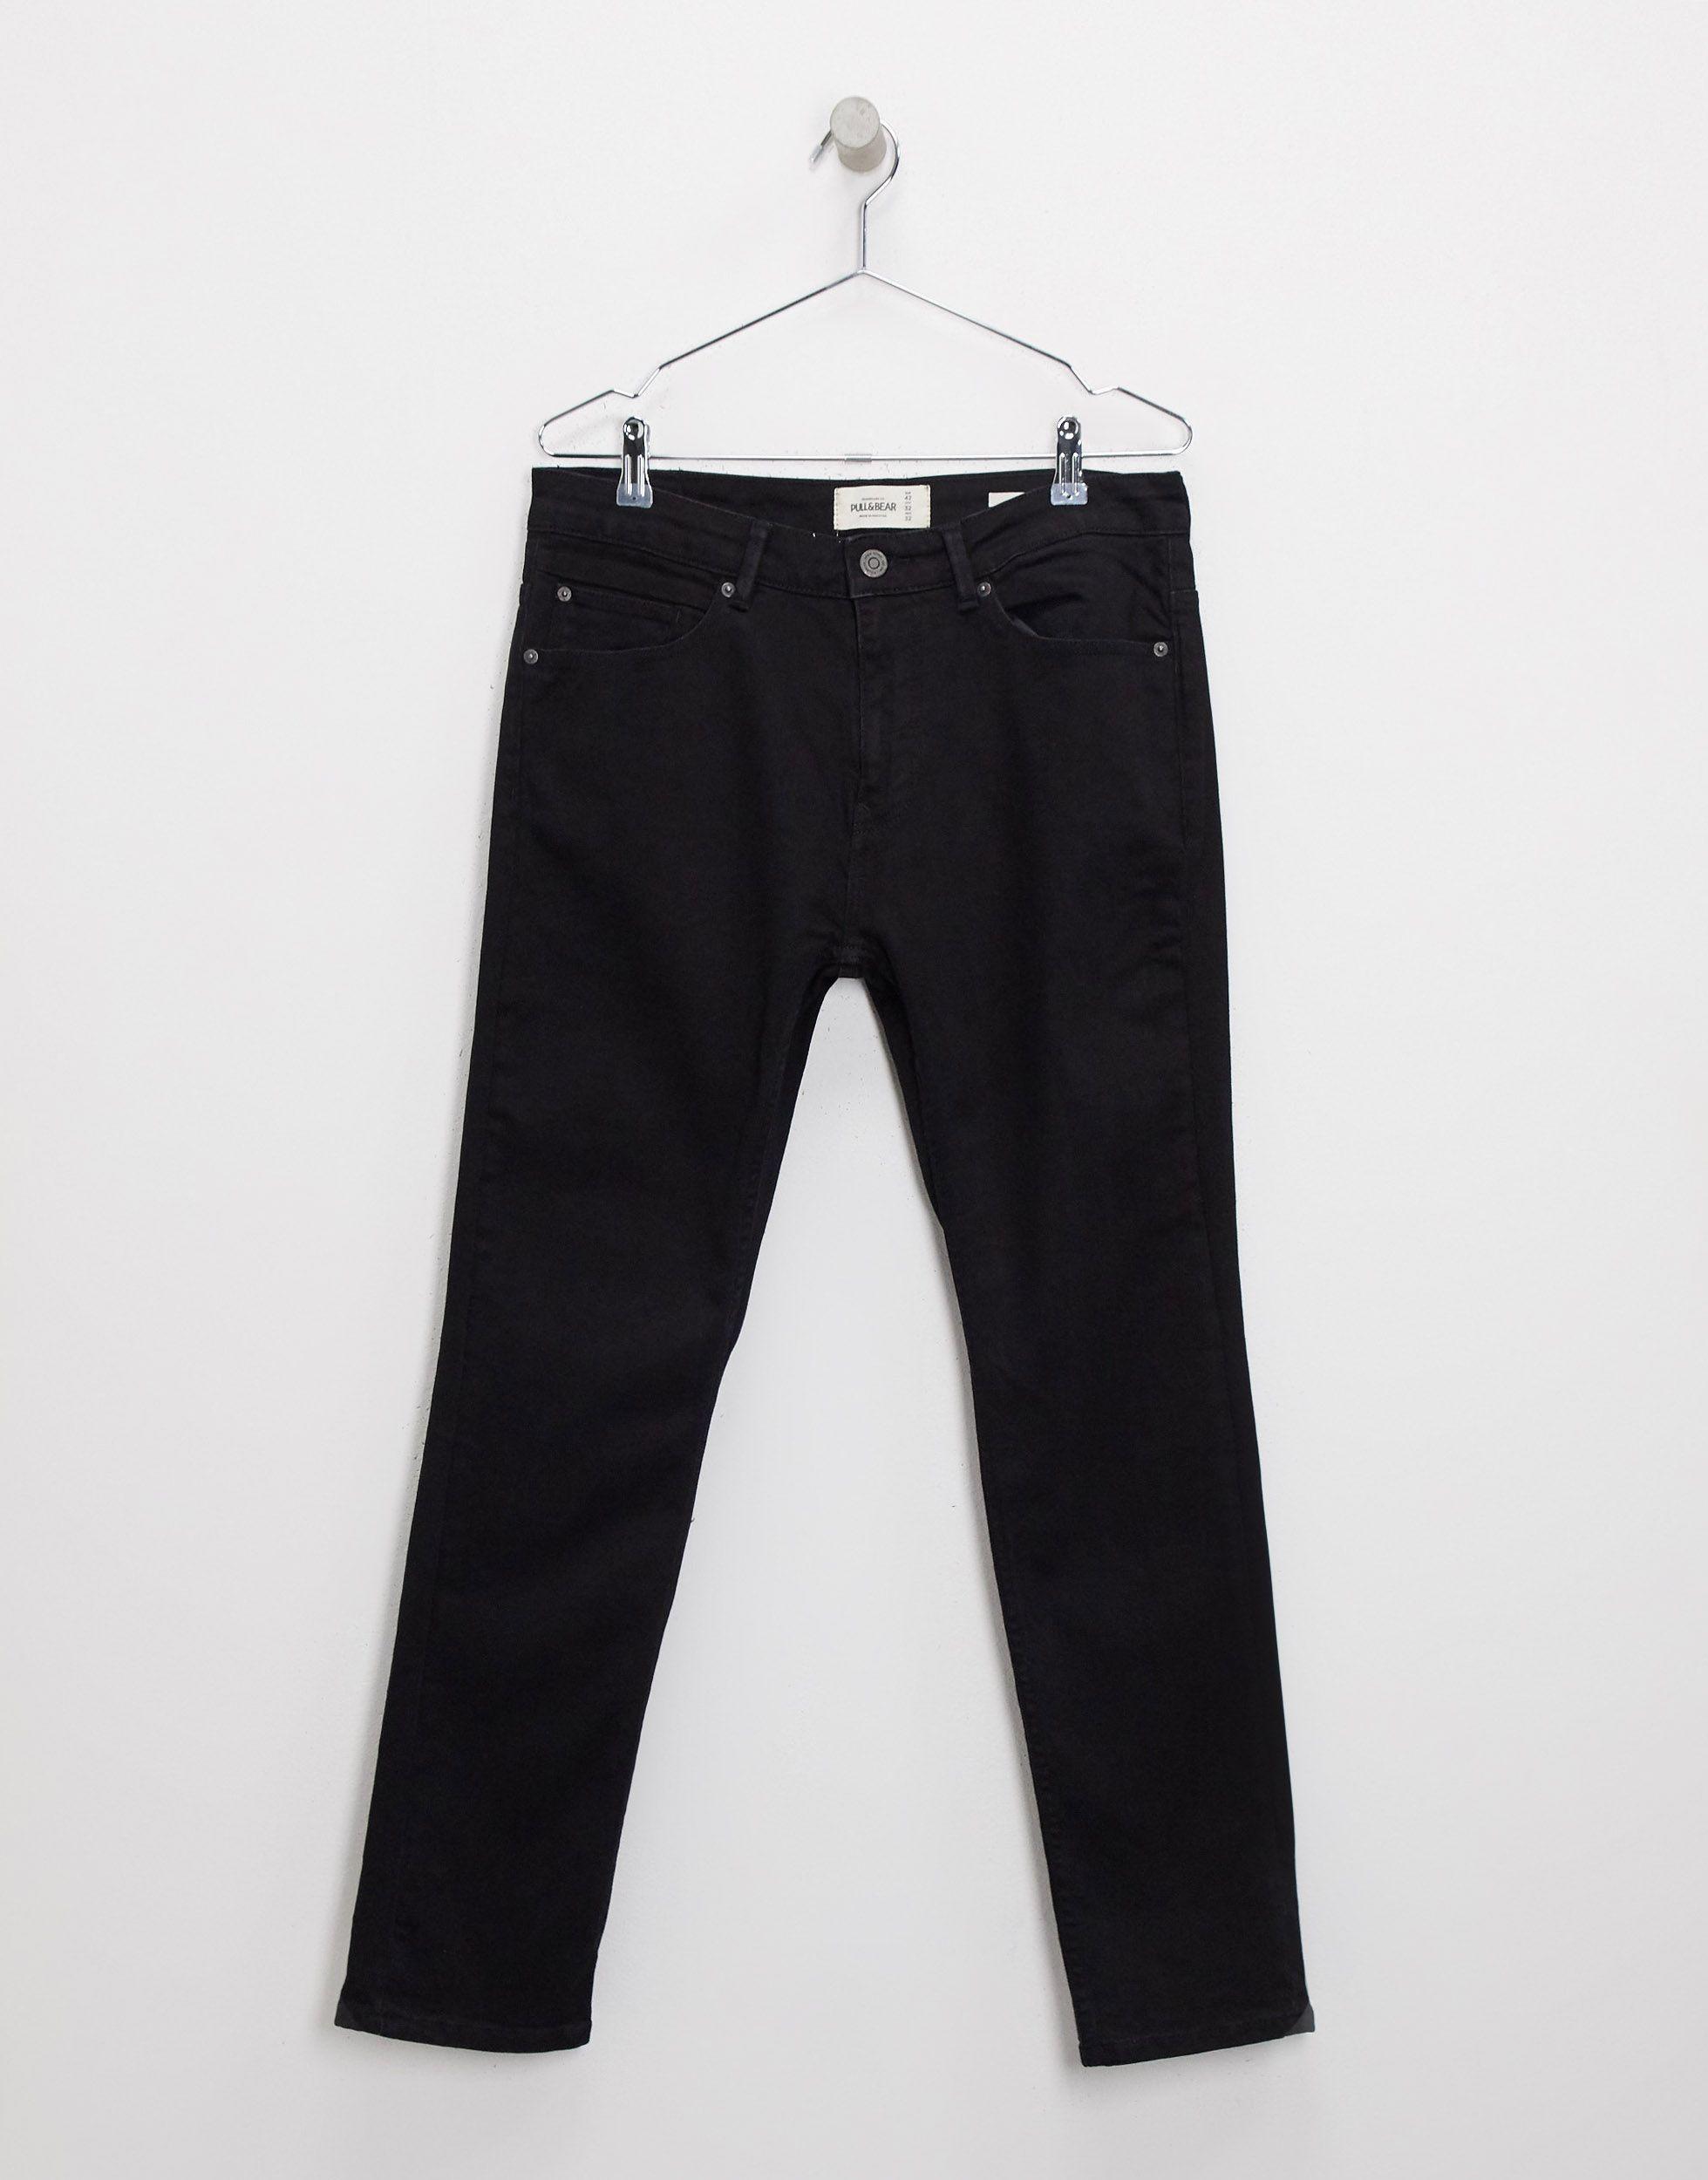 Pull&Bear Denim Slim Fit Jeans in Black for Men - Save 11% - Lyst